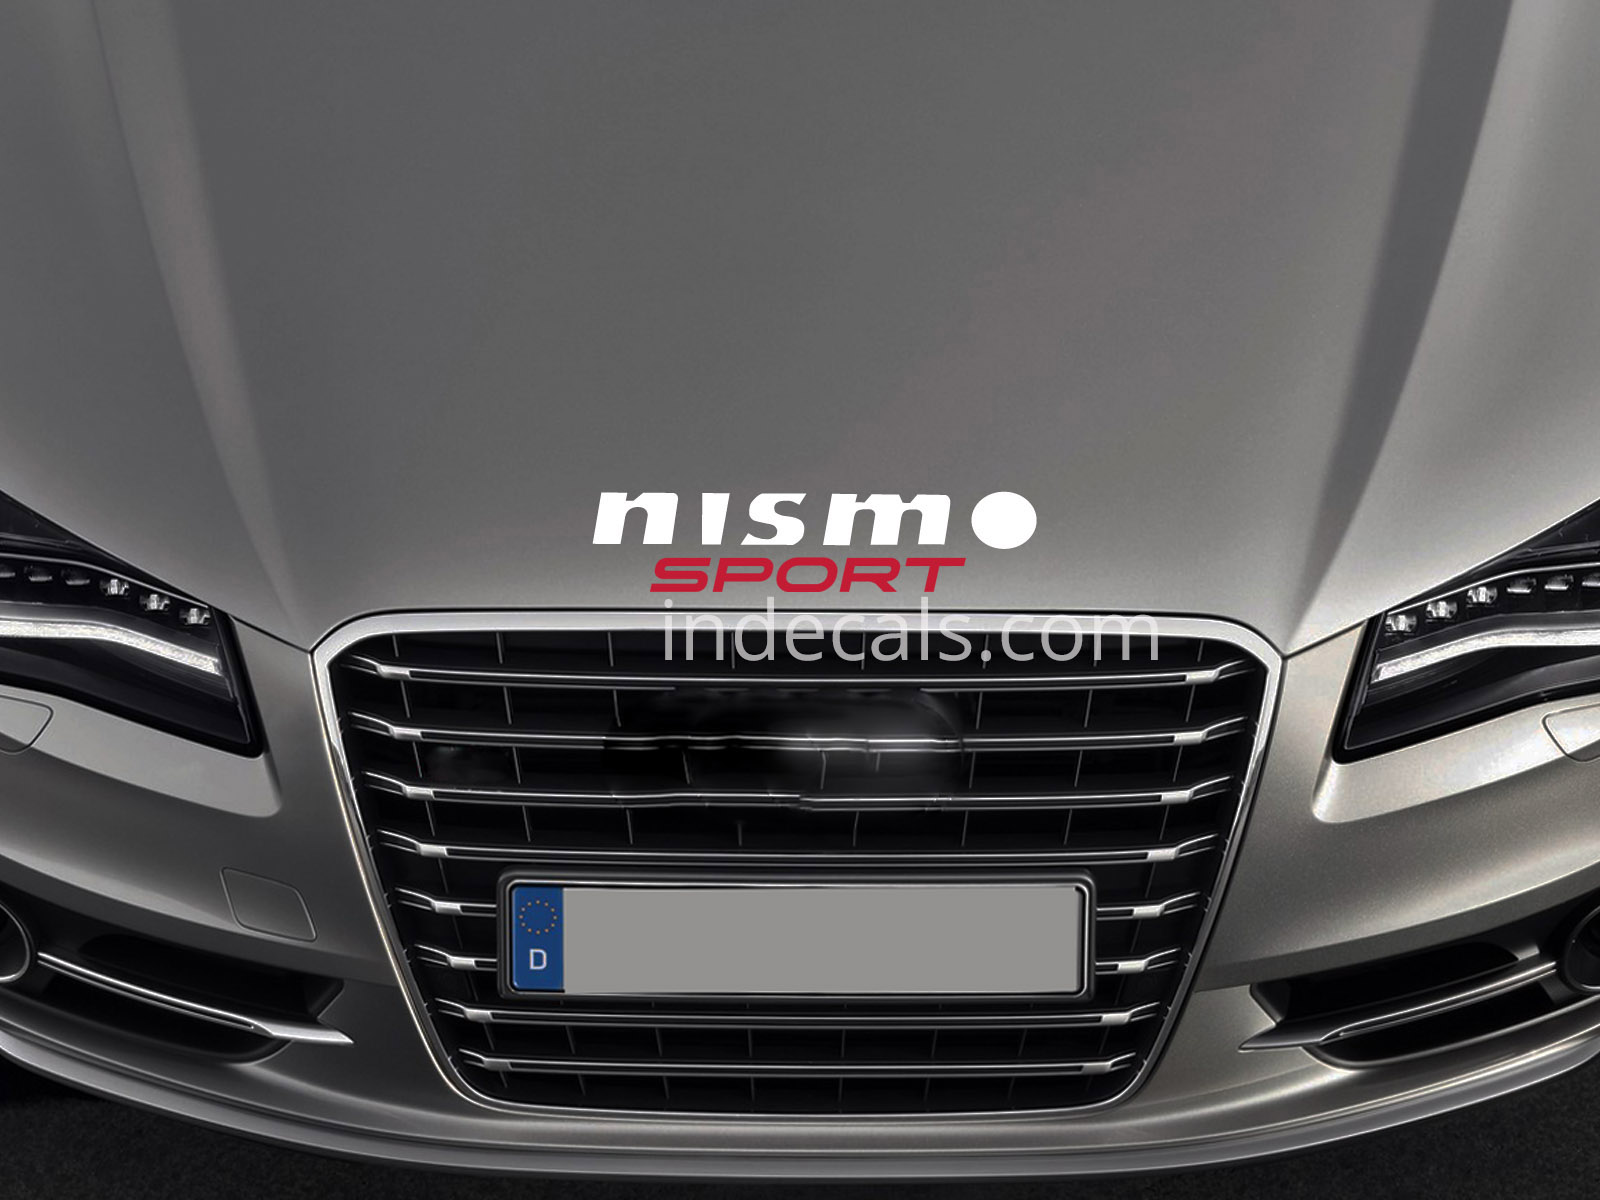 1 x Nismo Sport Sticker for Bonnet - White & Red